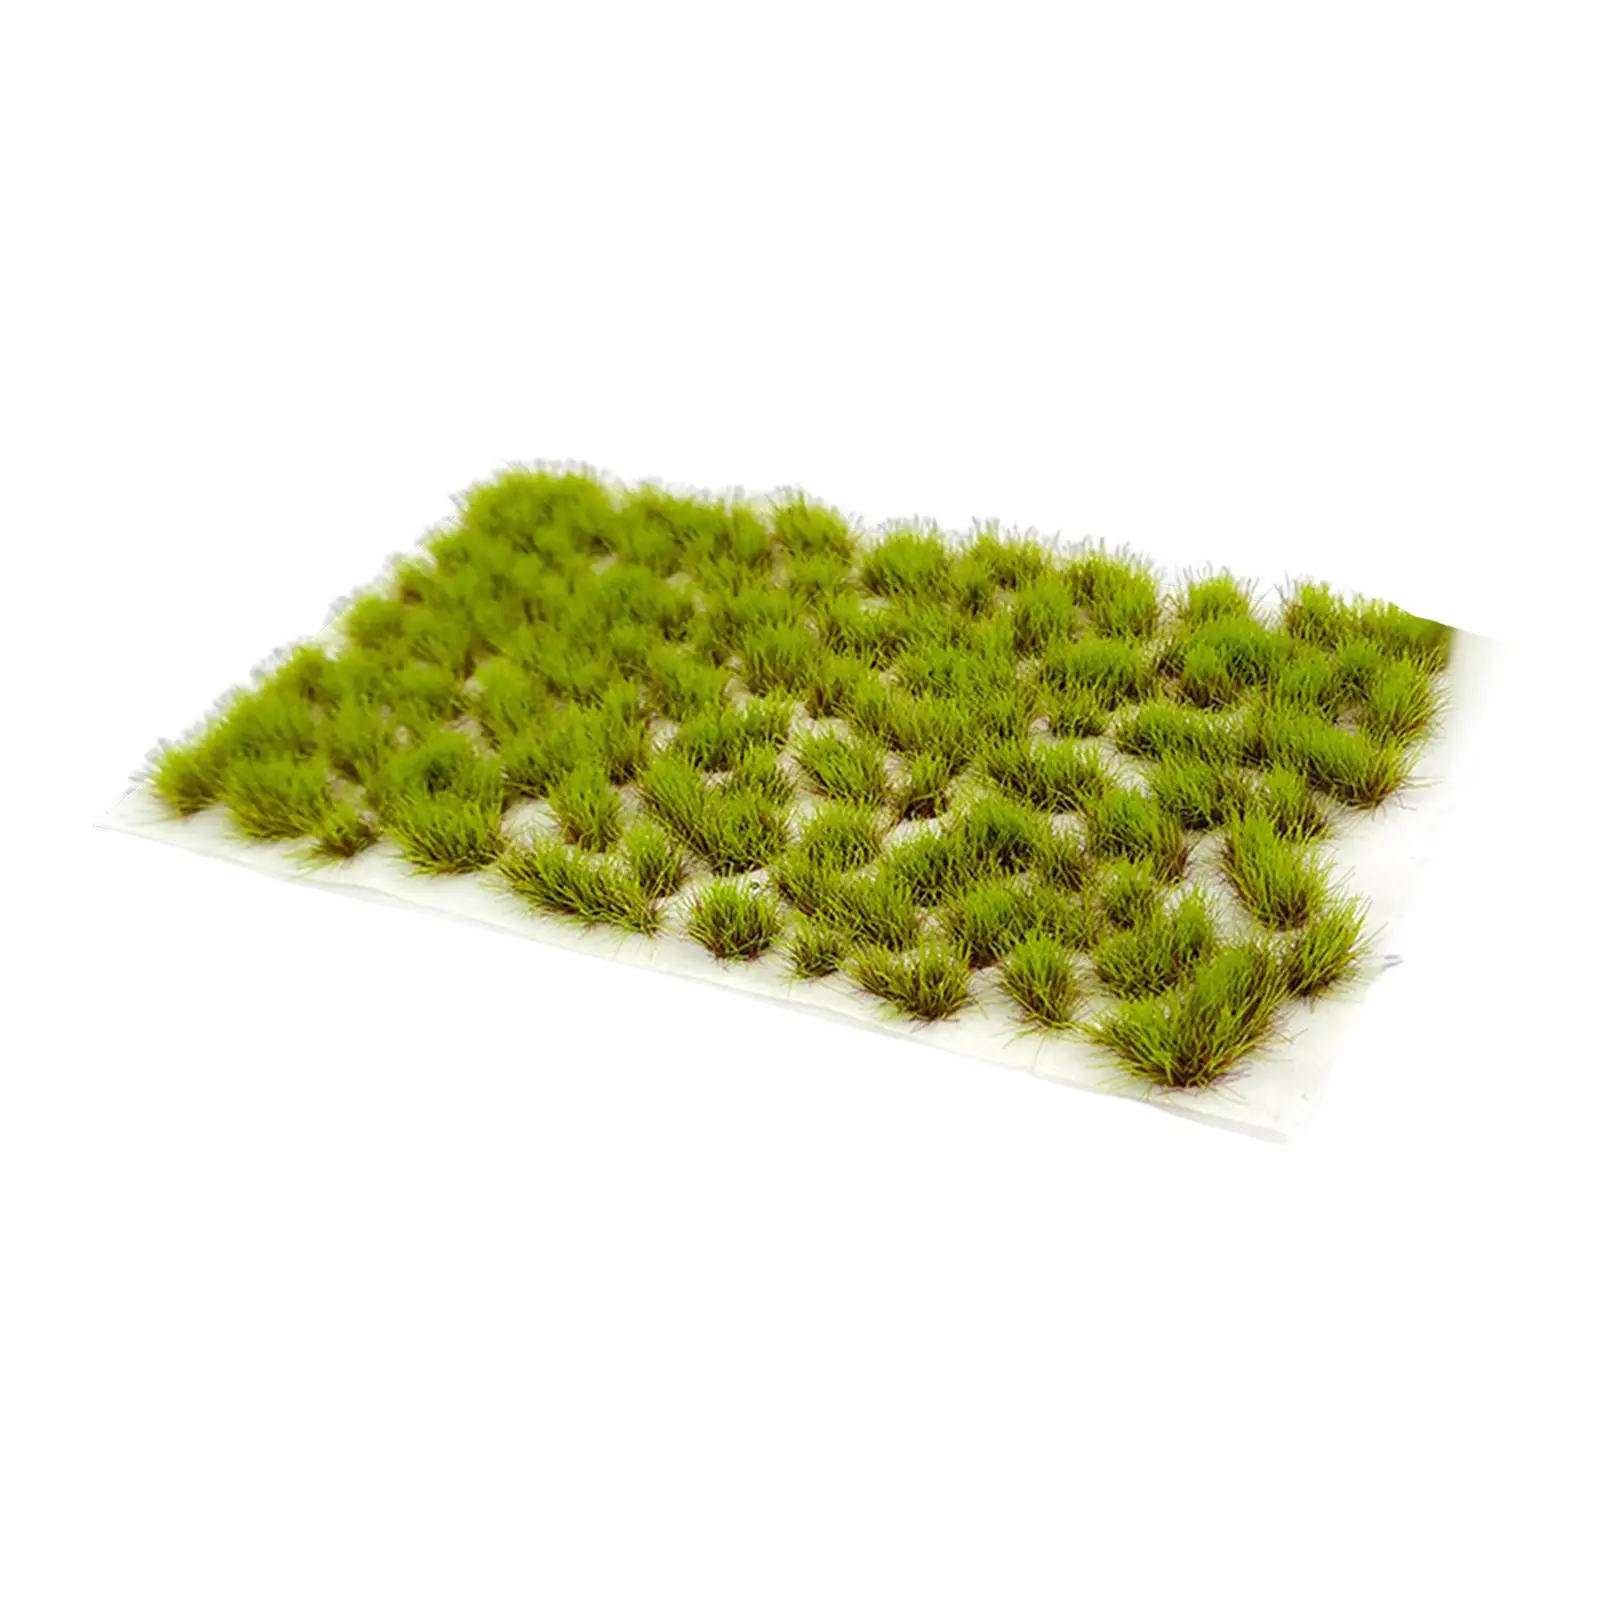 95 Pieces Simulation Large Cluster Grass Sand Layout Model Micro Landscape Decor